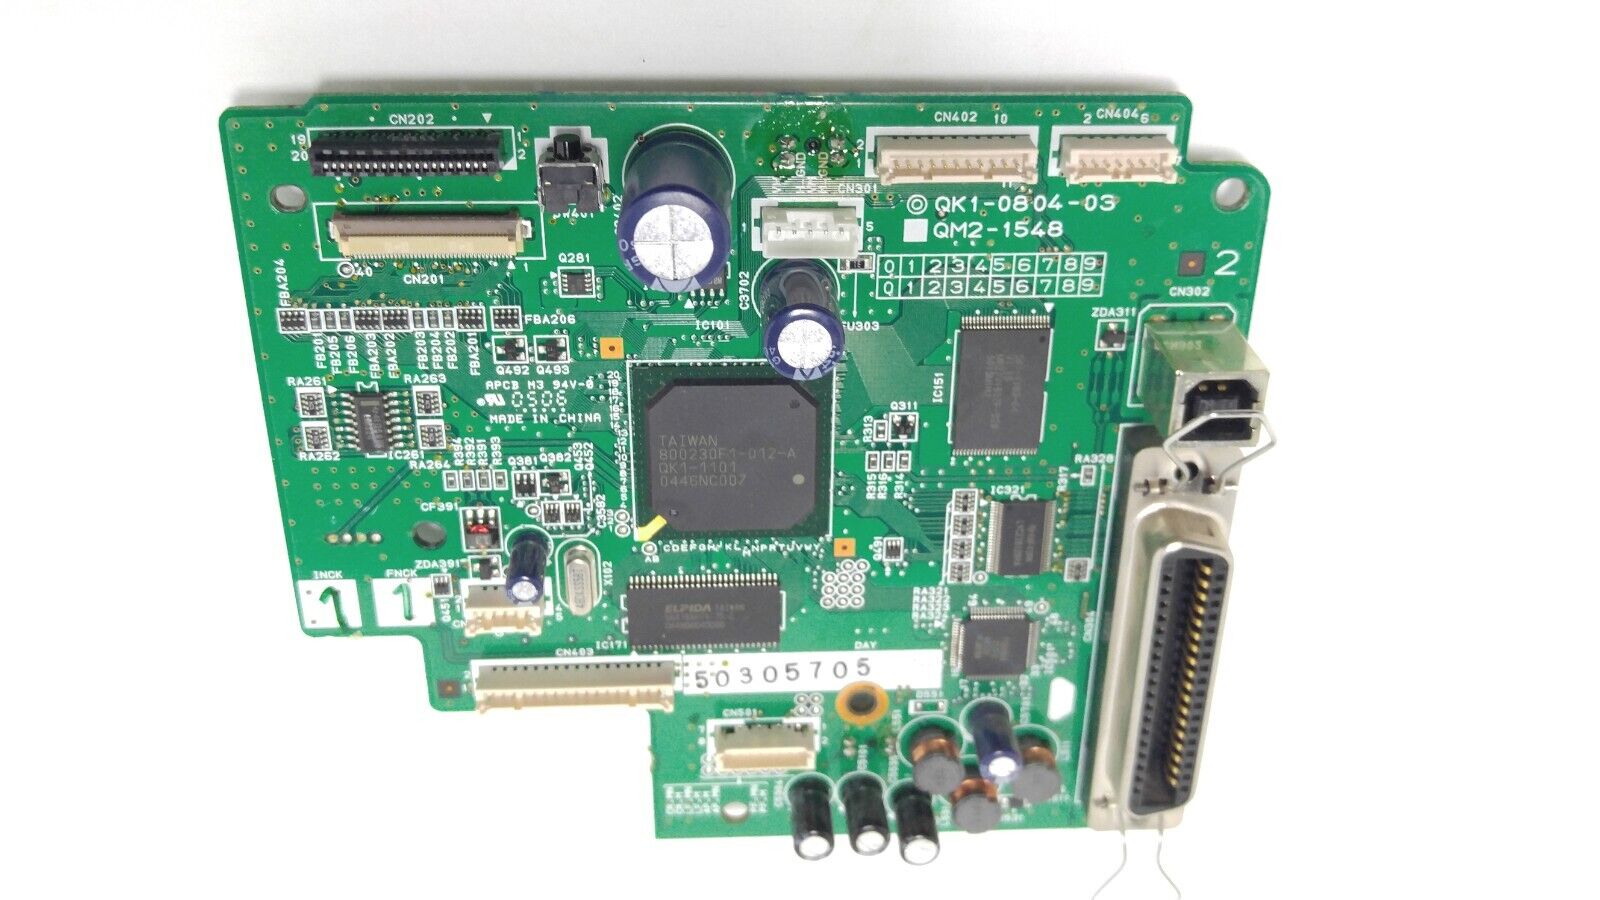 Canon Pixma ip4000 main logic board - QM2-1548 QK1-0804-03